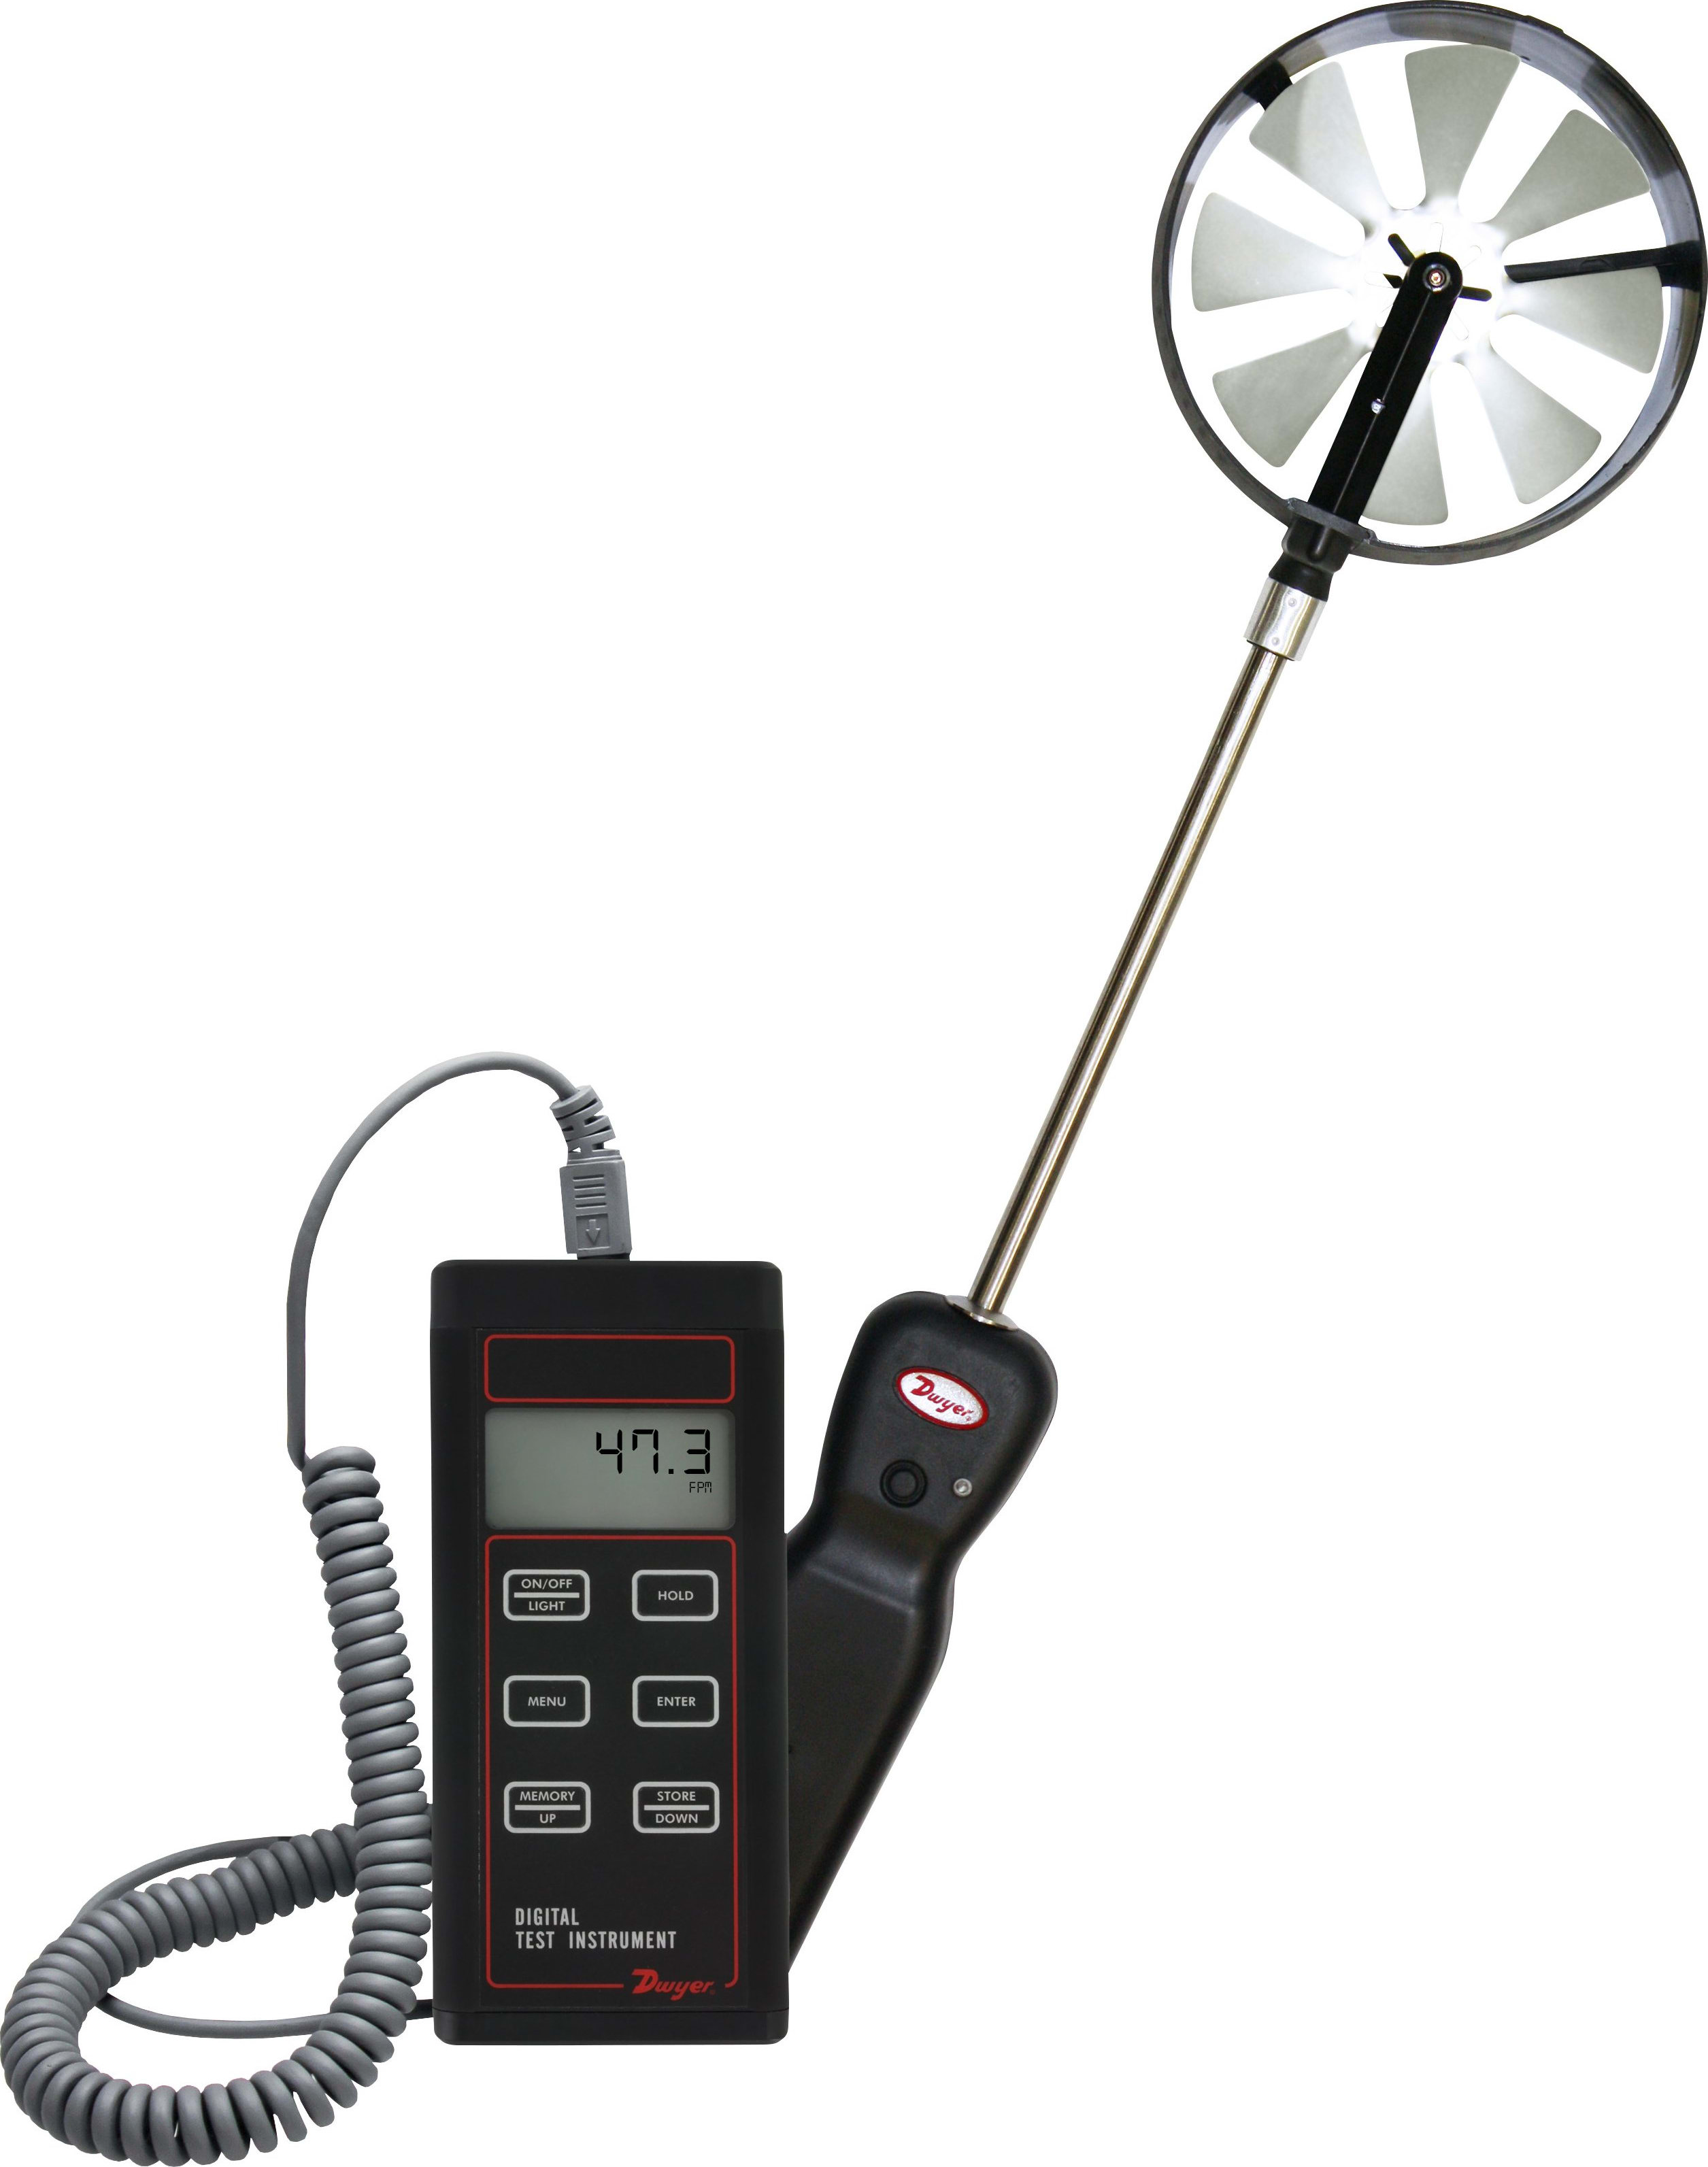 Dwyer 473B-1 Vane Thermo-Anemometer Test Instrument